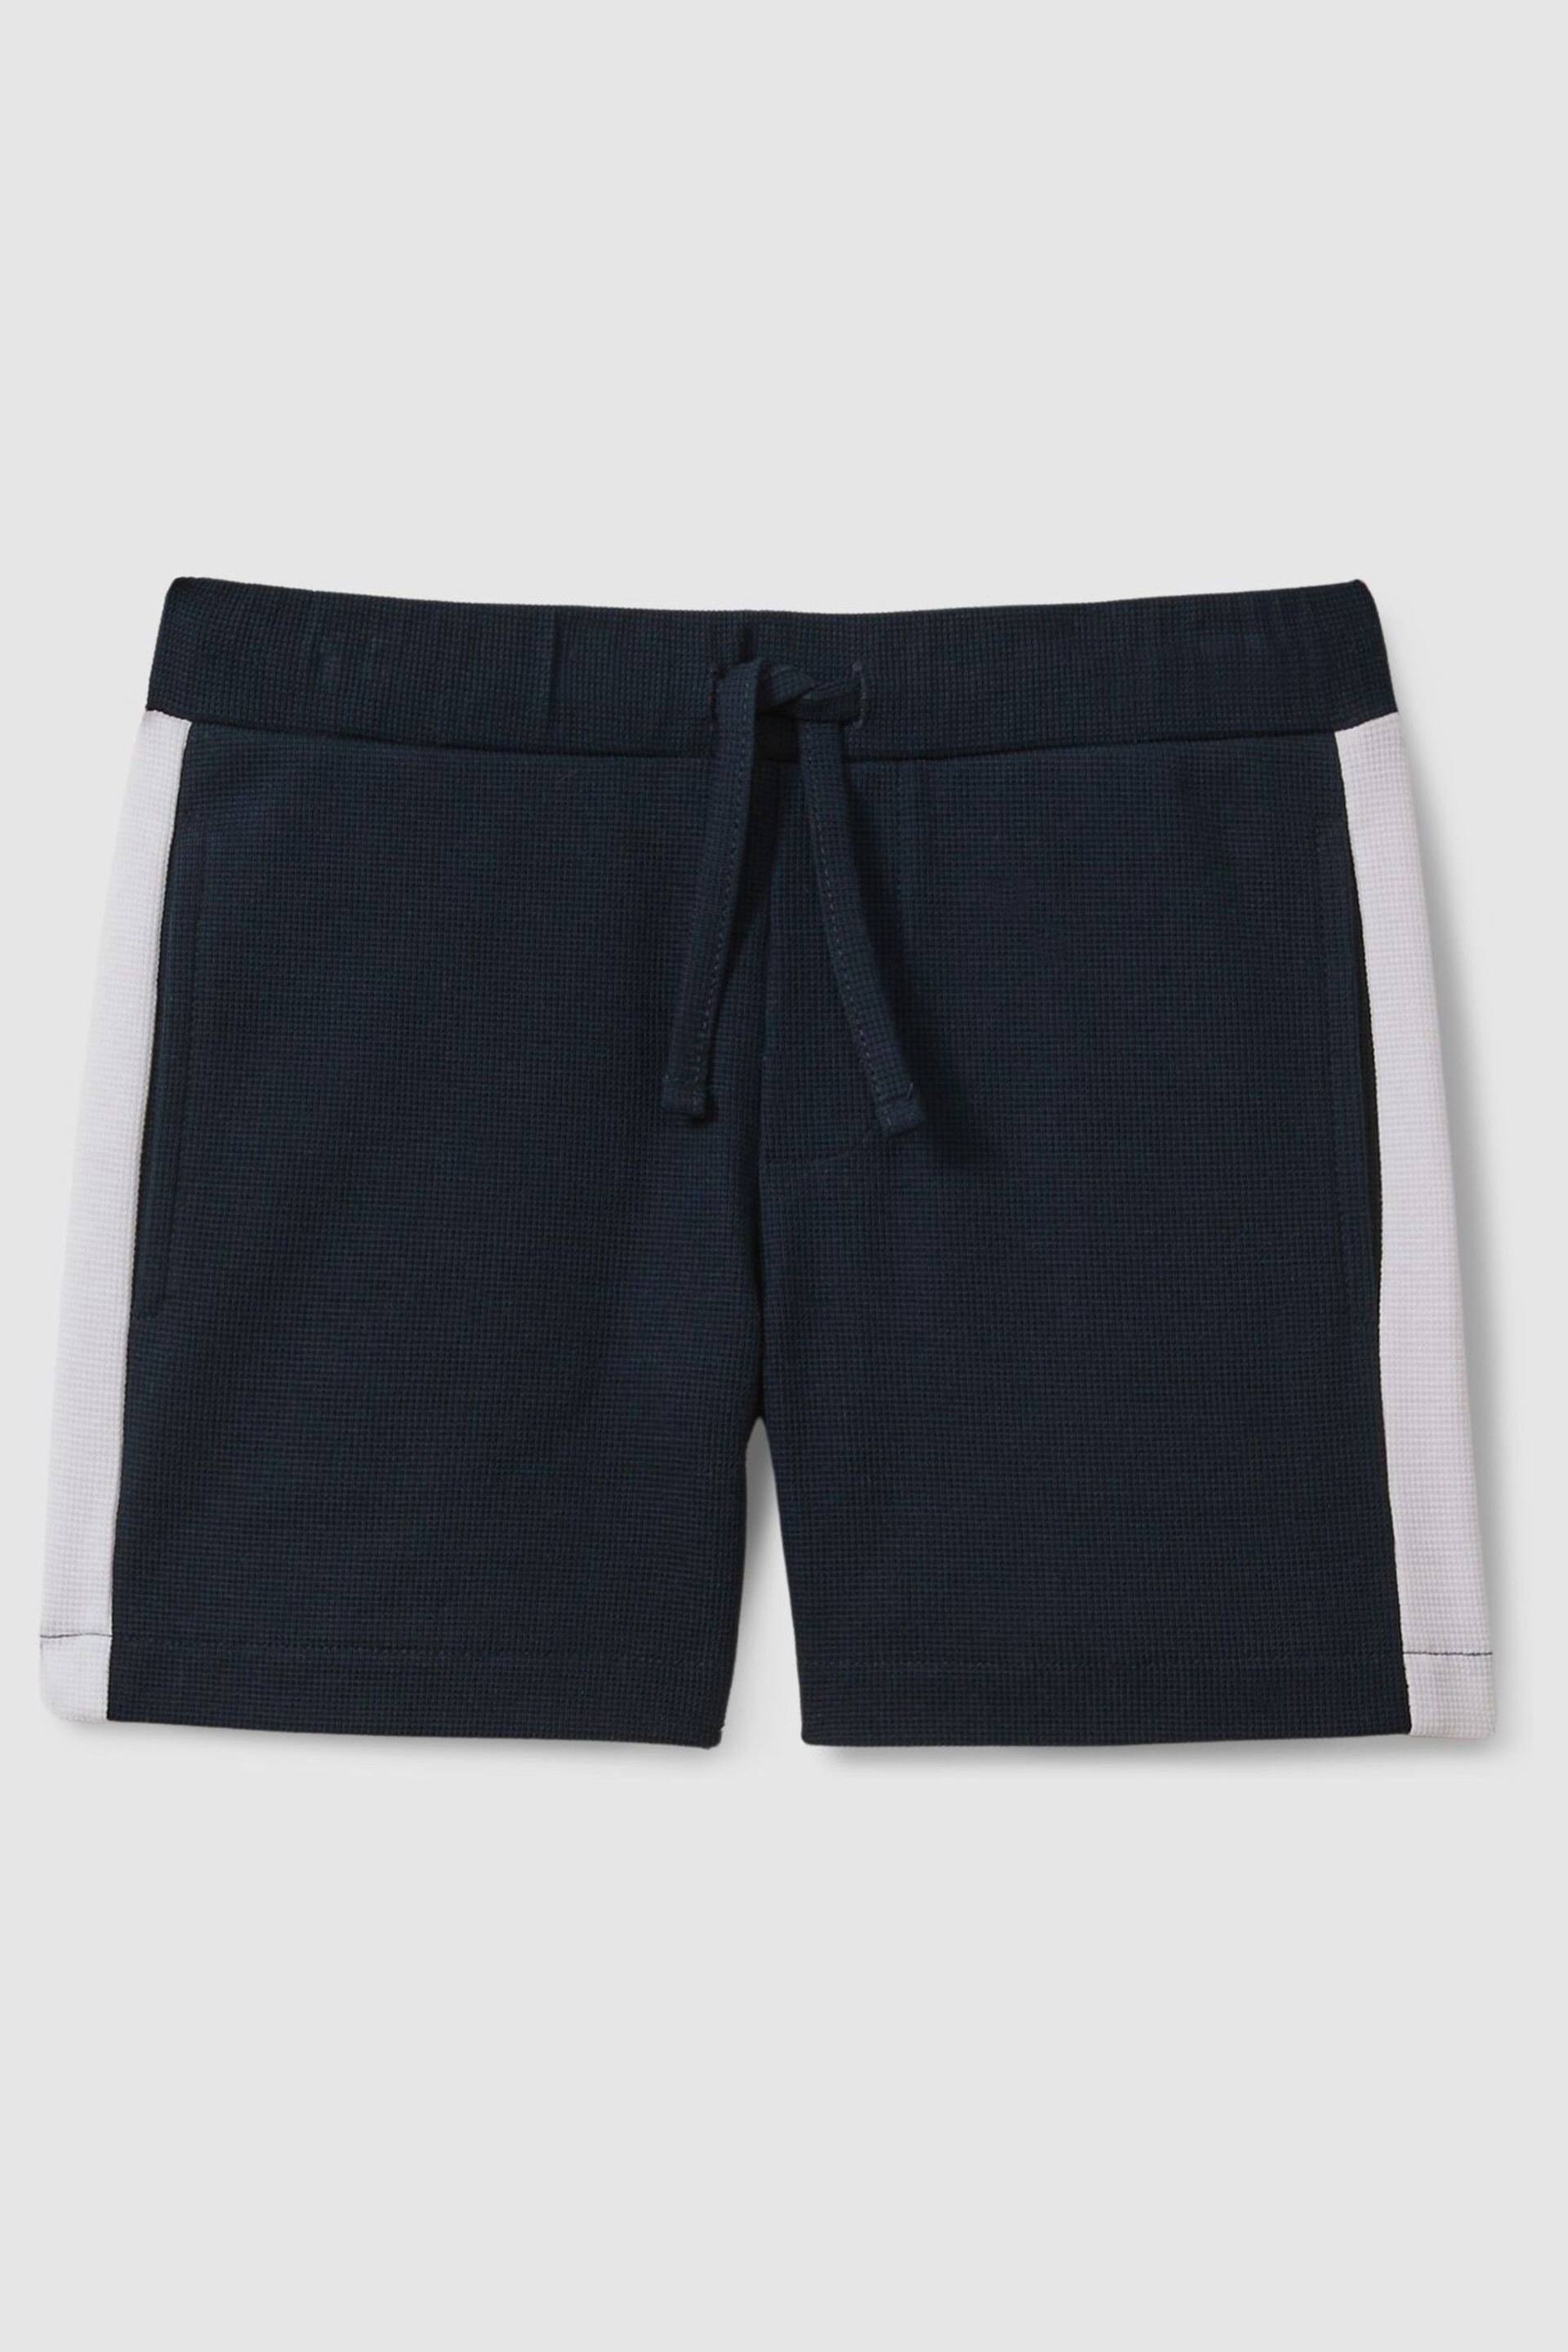 Reiss Navy/White Marl Teen Textured Cotton Drawstring Shorts - Image 1 of 4